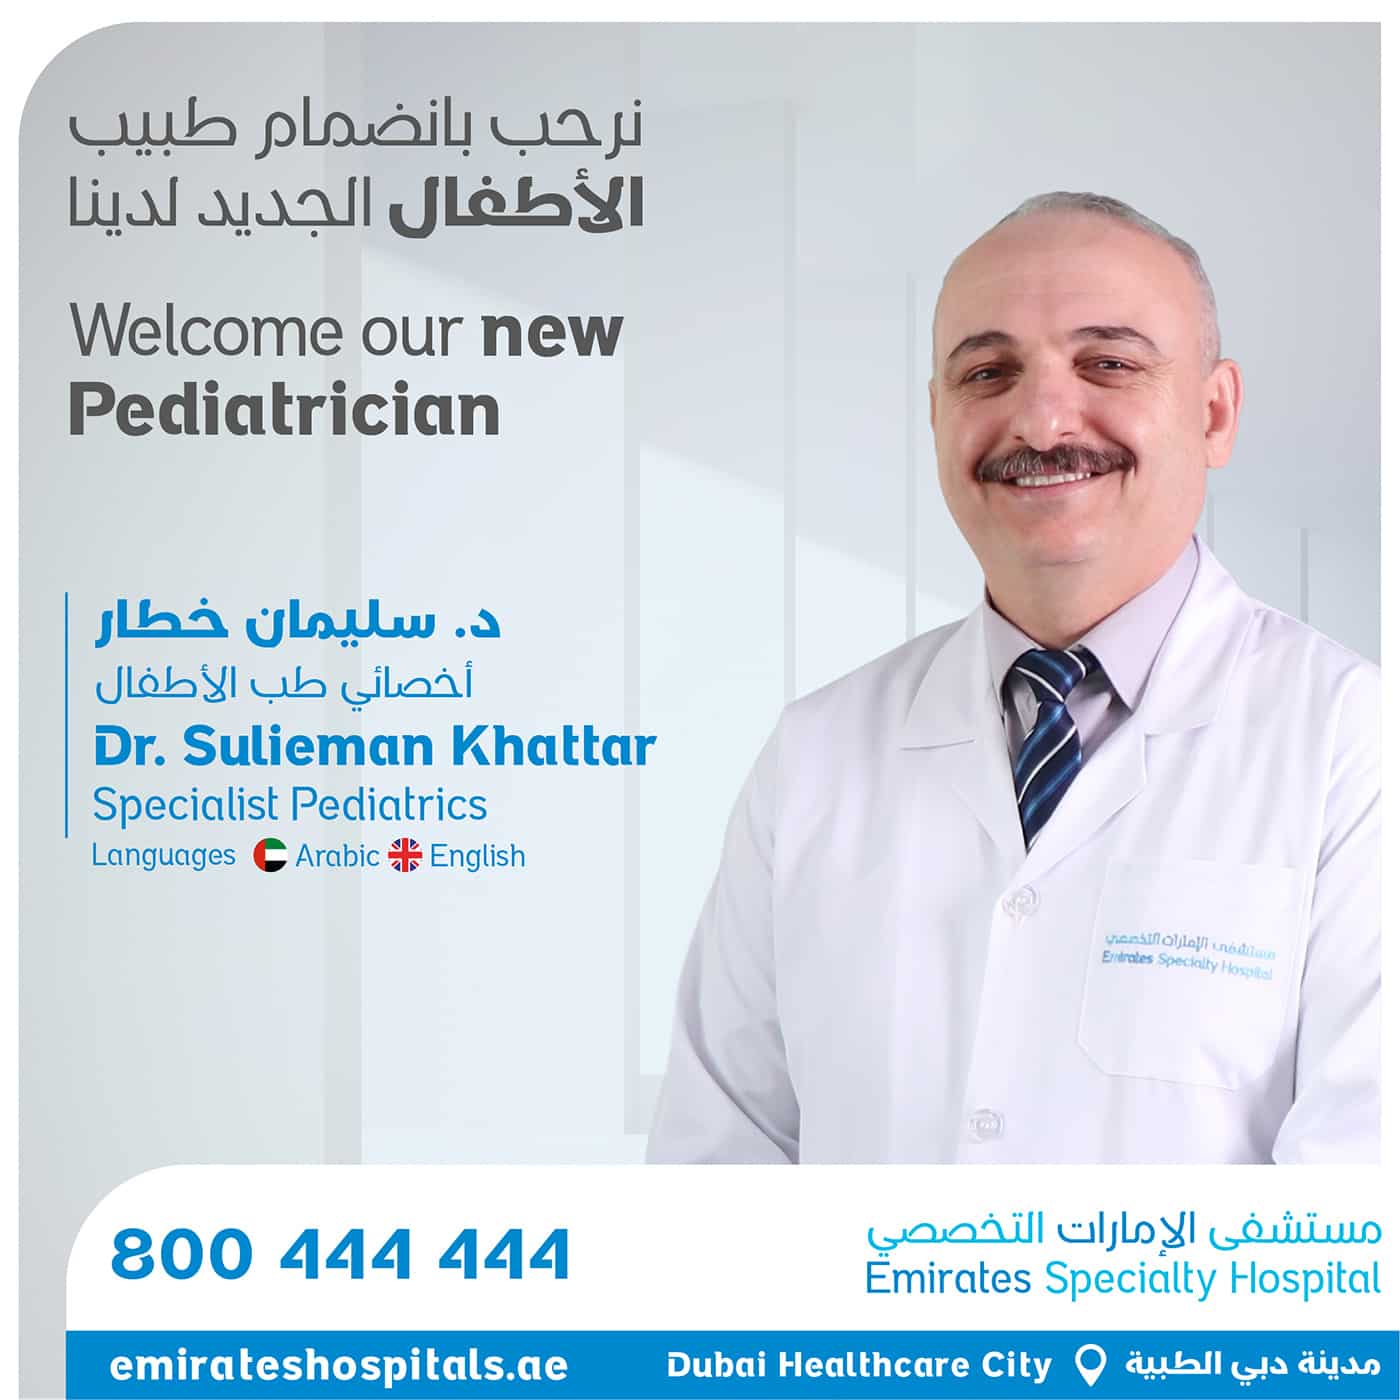 Dr. Sulieman Khattar, Specialist - Pediatrics Joined Emirates Specialty Hospital